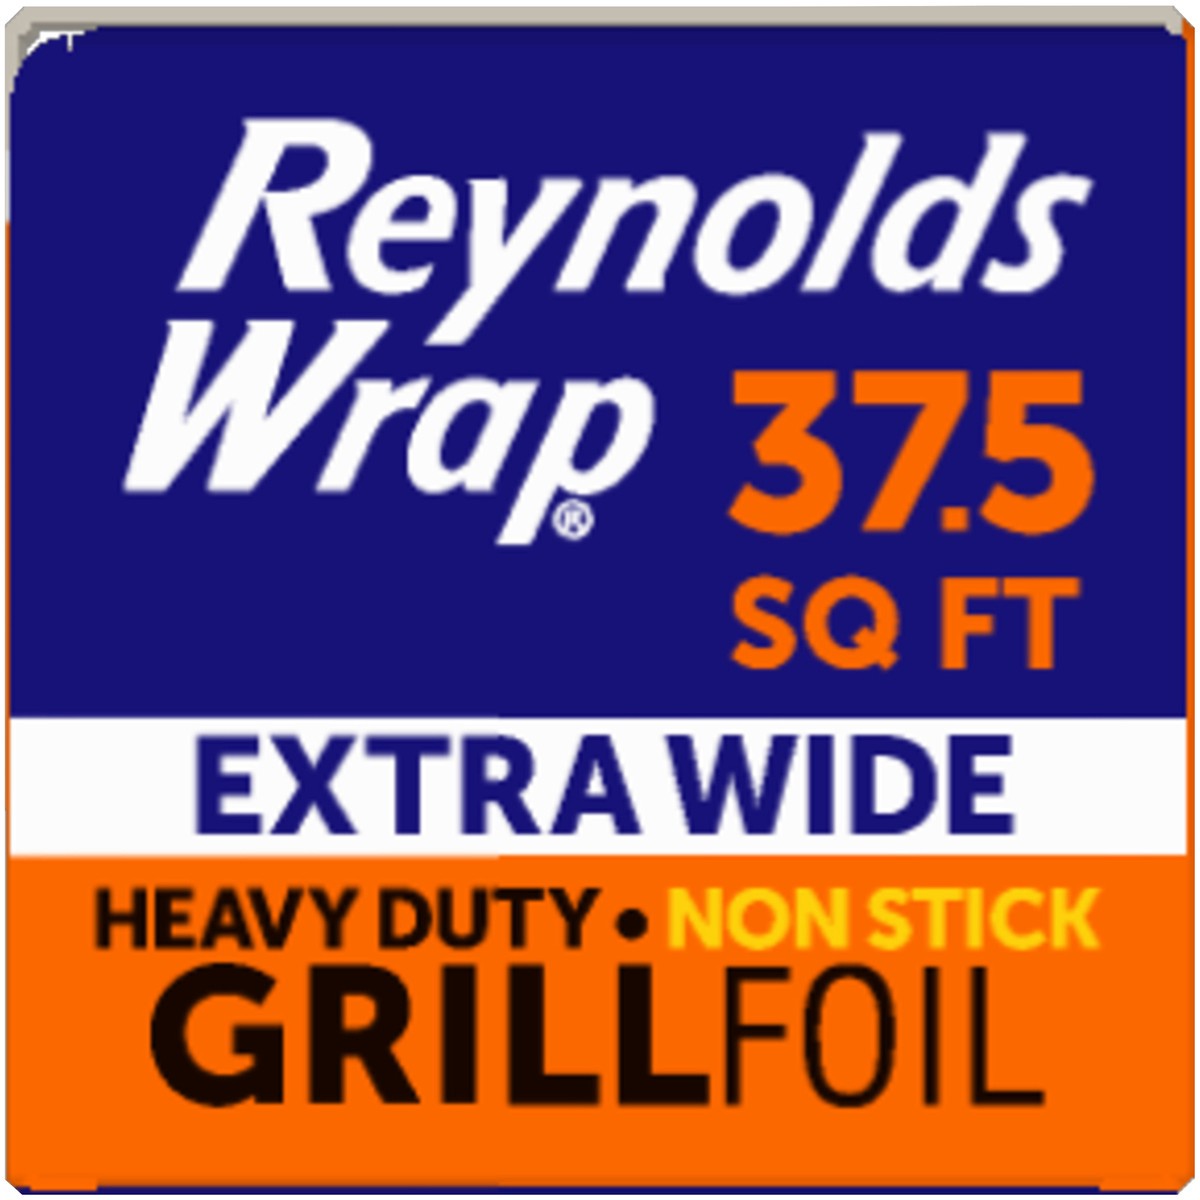 slide 8 of 9, Reynolds Wrap 37.5 Square Feet Heavy Duty Non-Stick Grill Aluminum Foil 1 ea, 1 ct